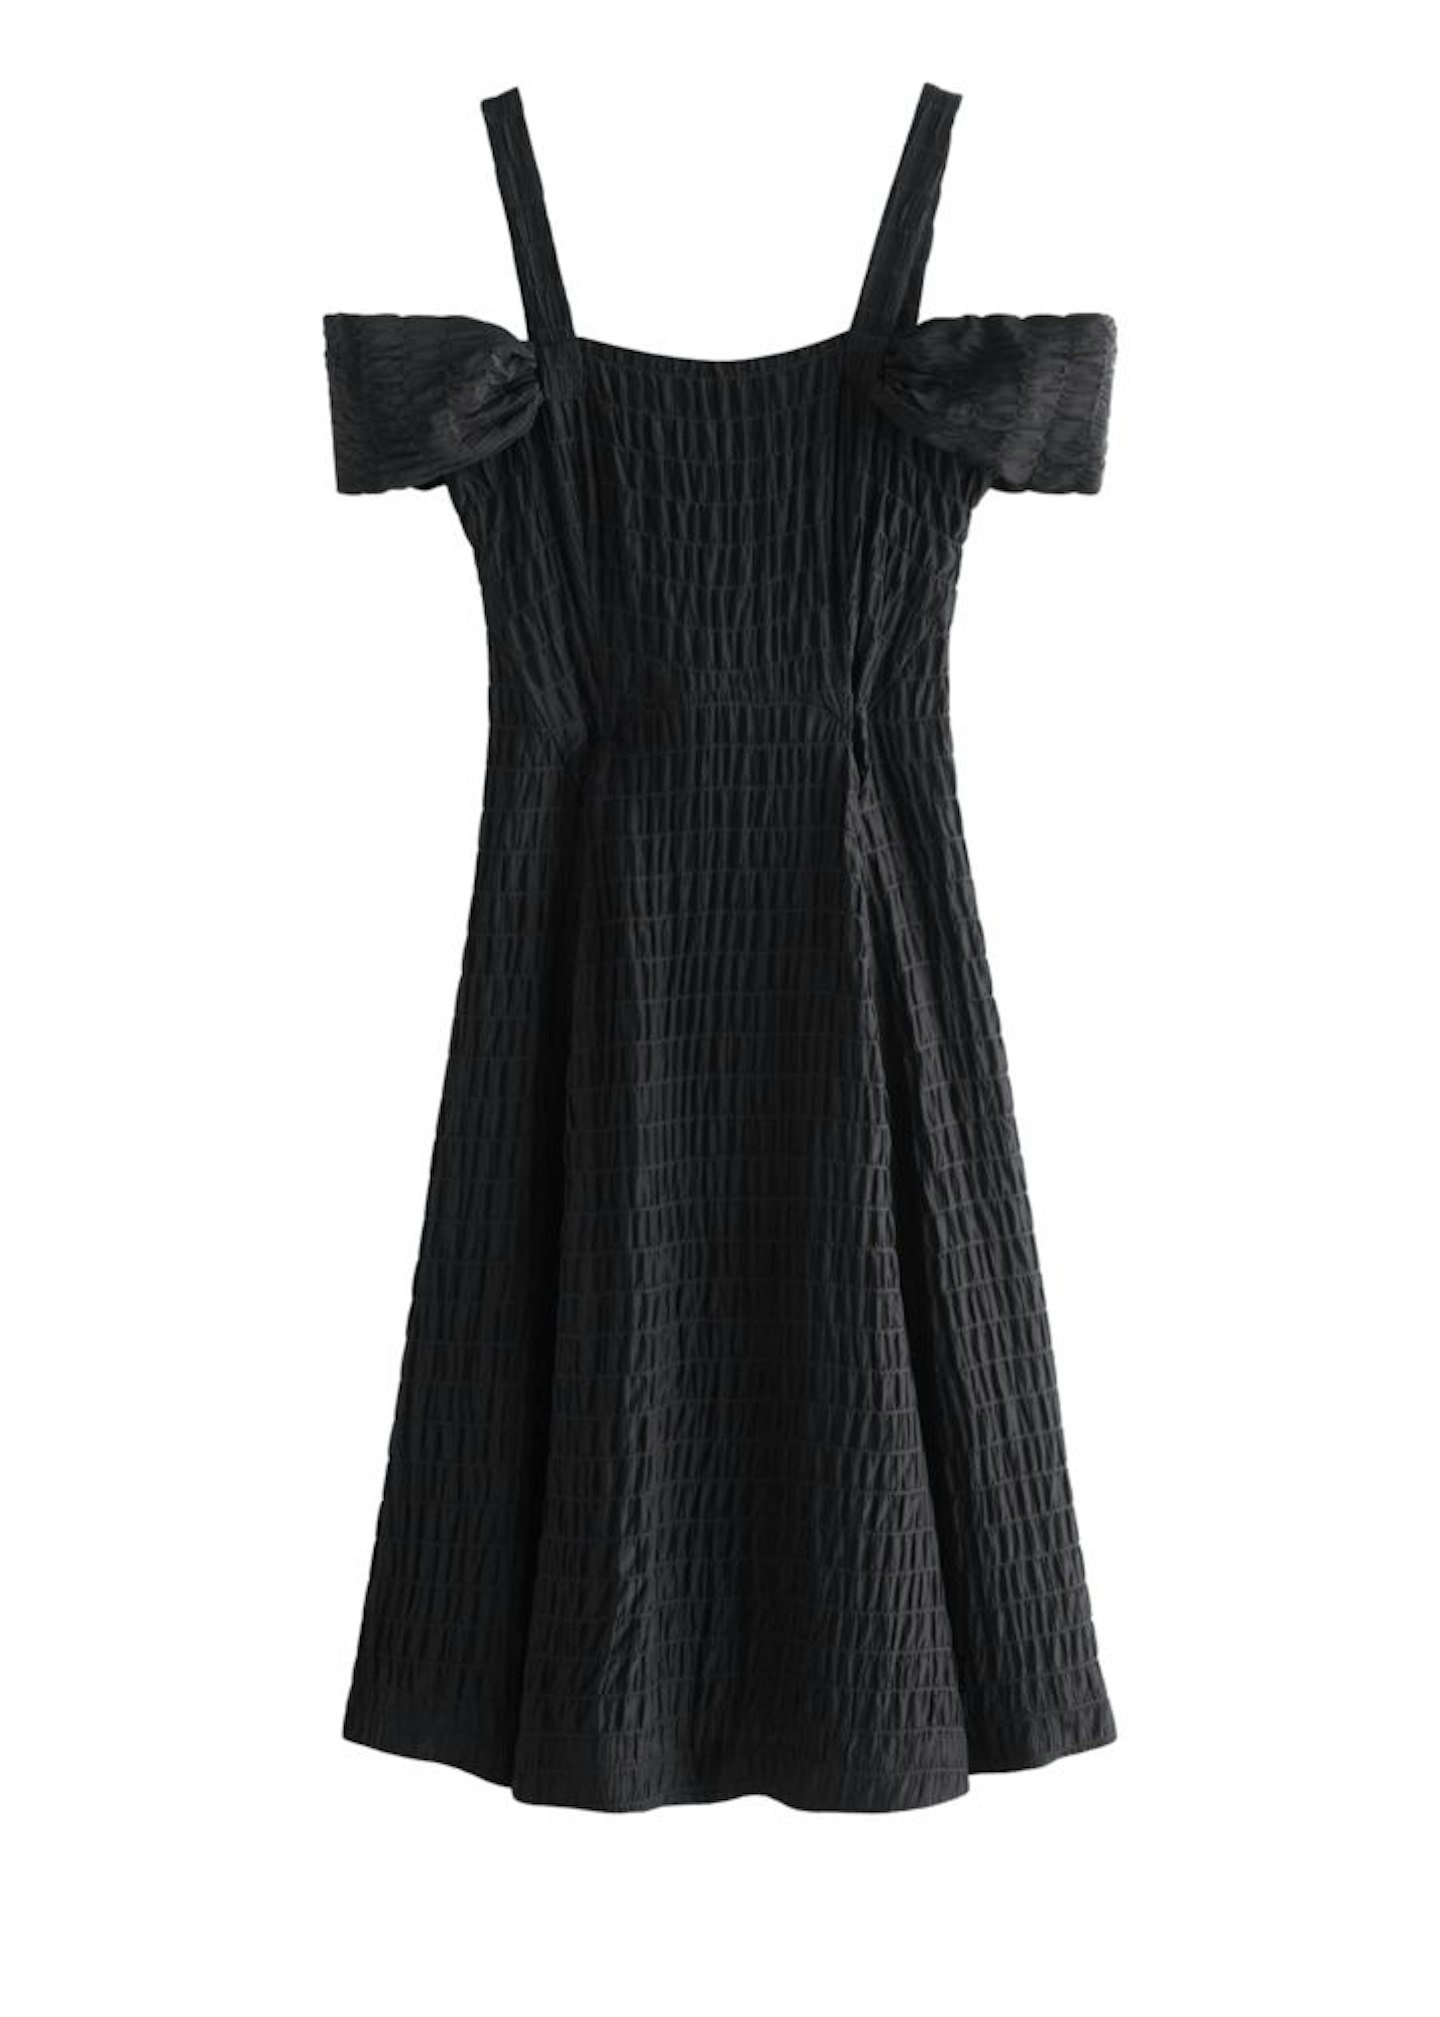 Rejina Pyo & Other Stories, Black Dress, £165